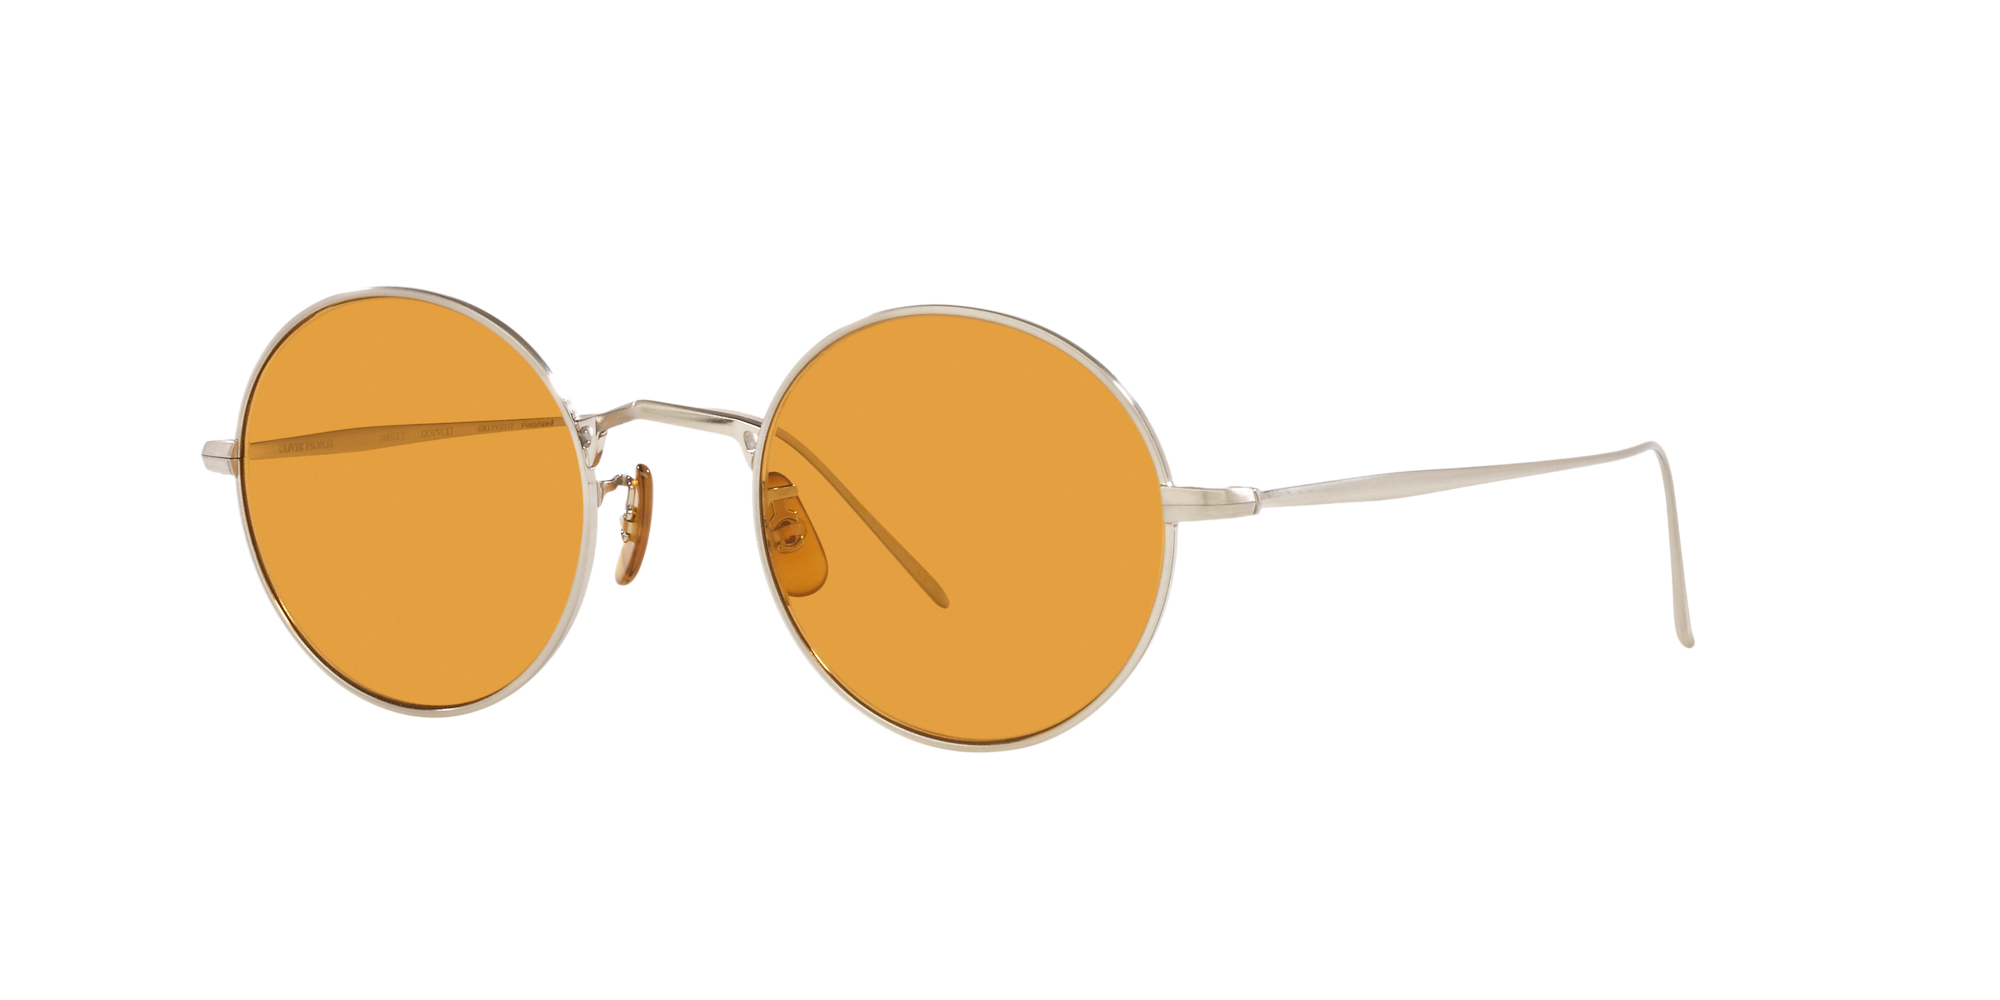 Oliver G. Ponti-3 Sunglasses in Brushed Chrome | Oliver®